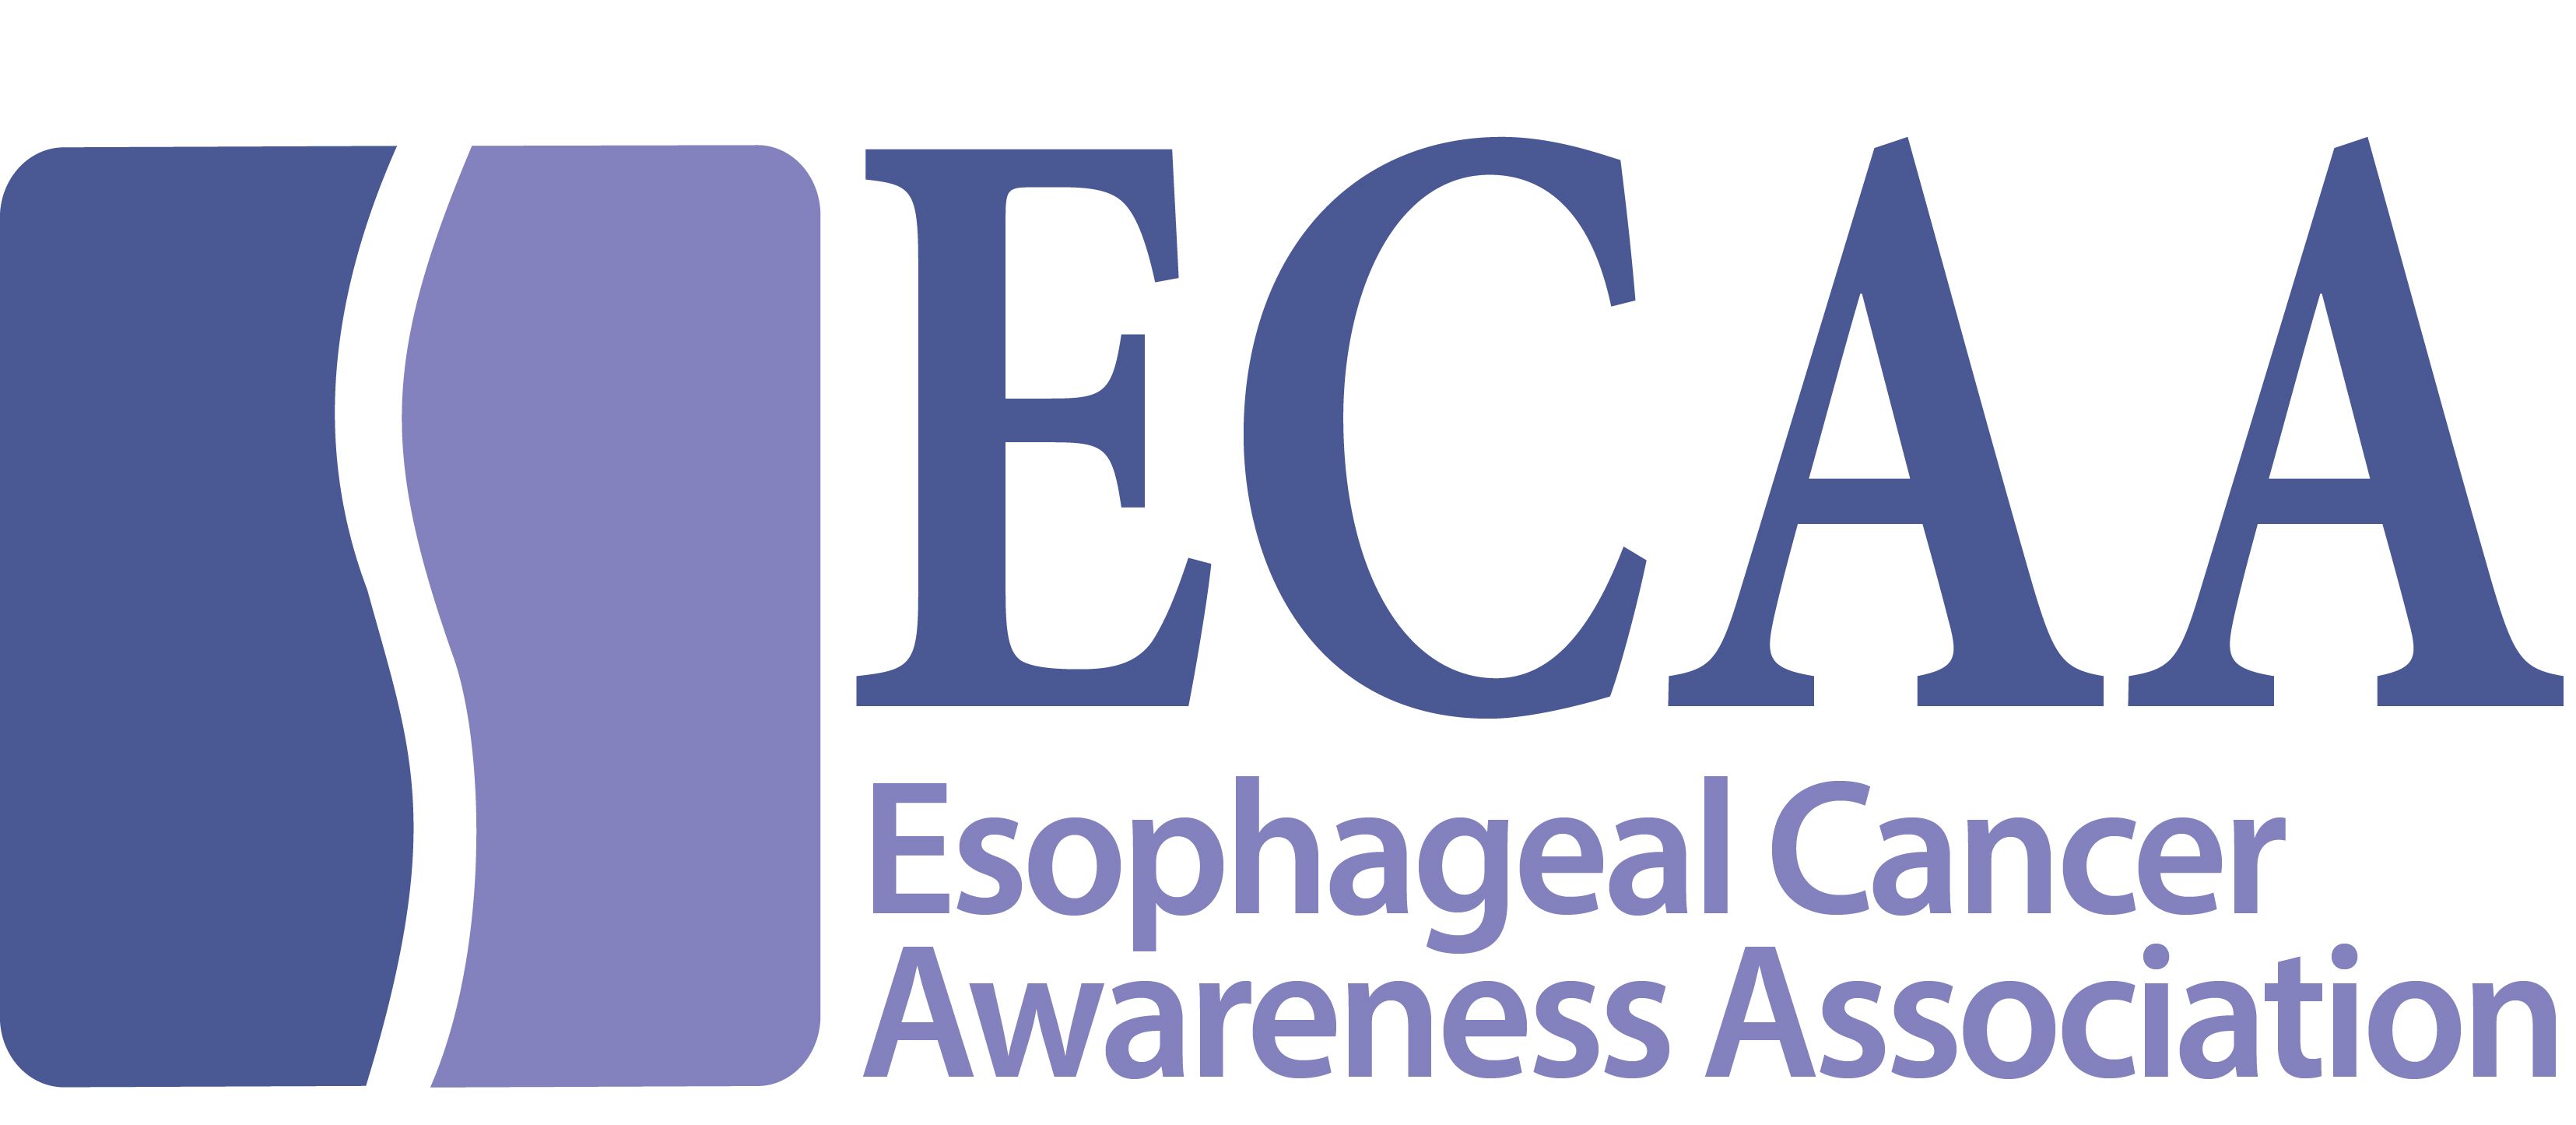 Advocacy Groups | <b>Esophageal Cancer Awareness Association</b>